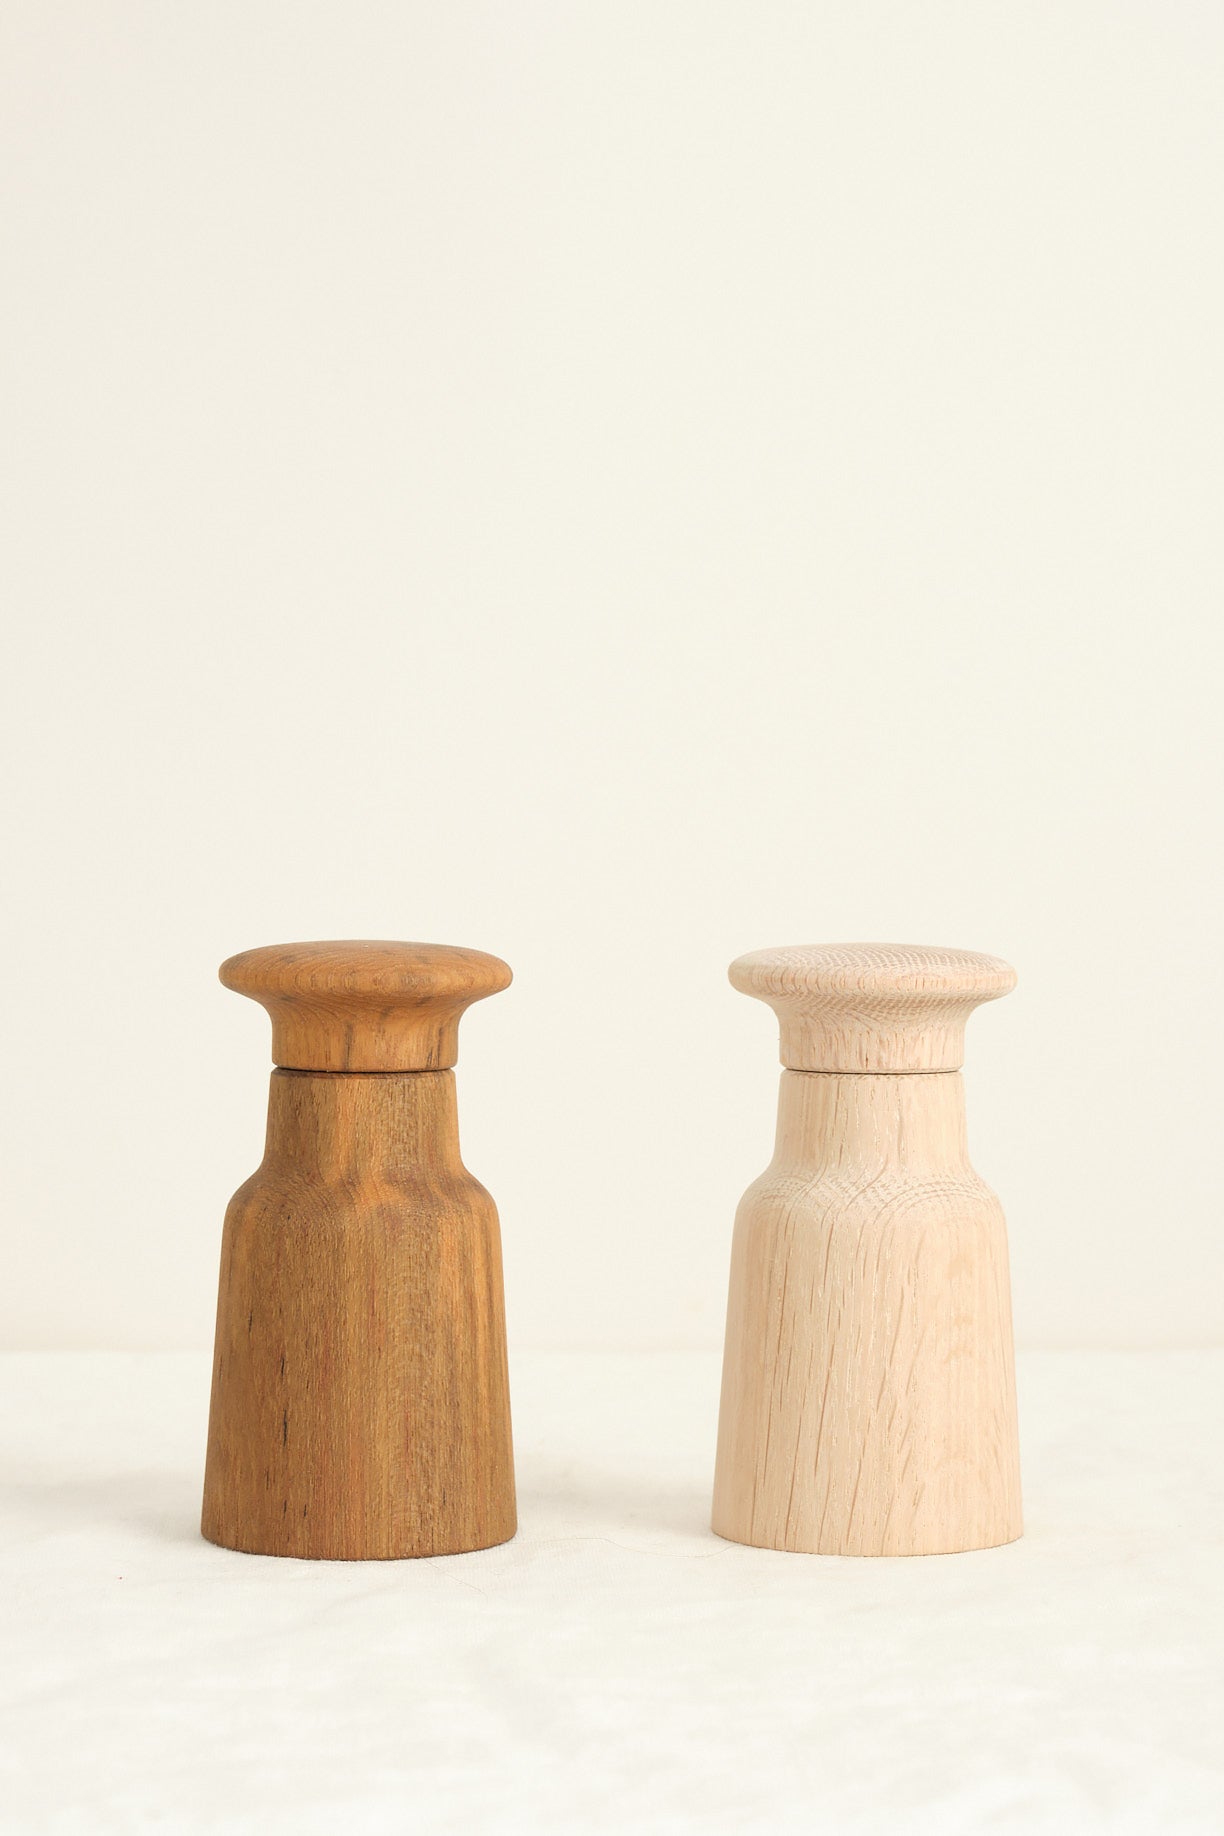 wood salt and pepper grinders